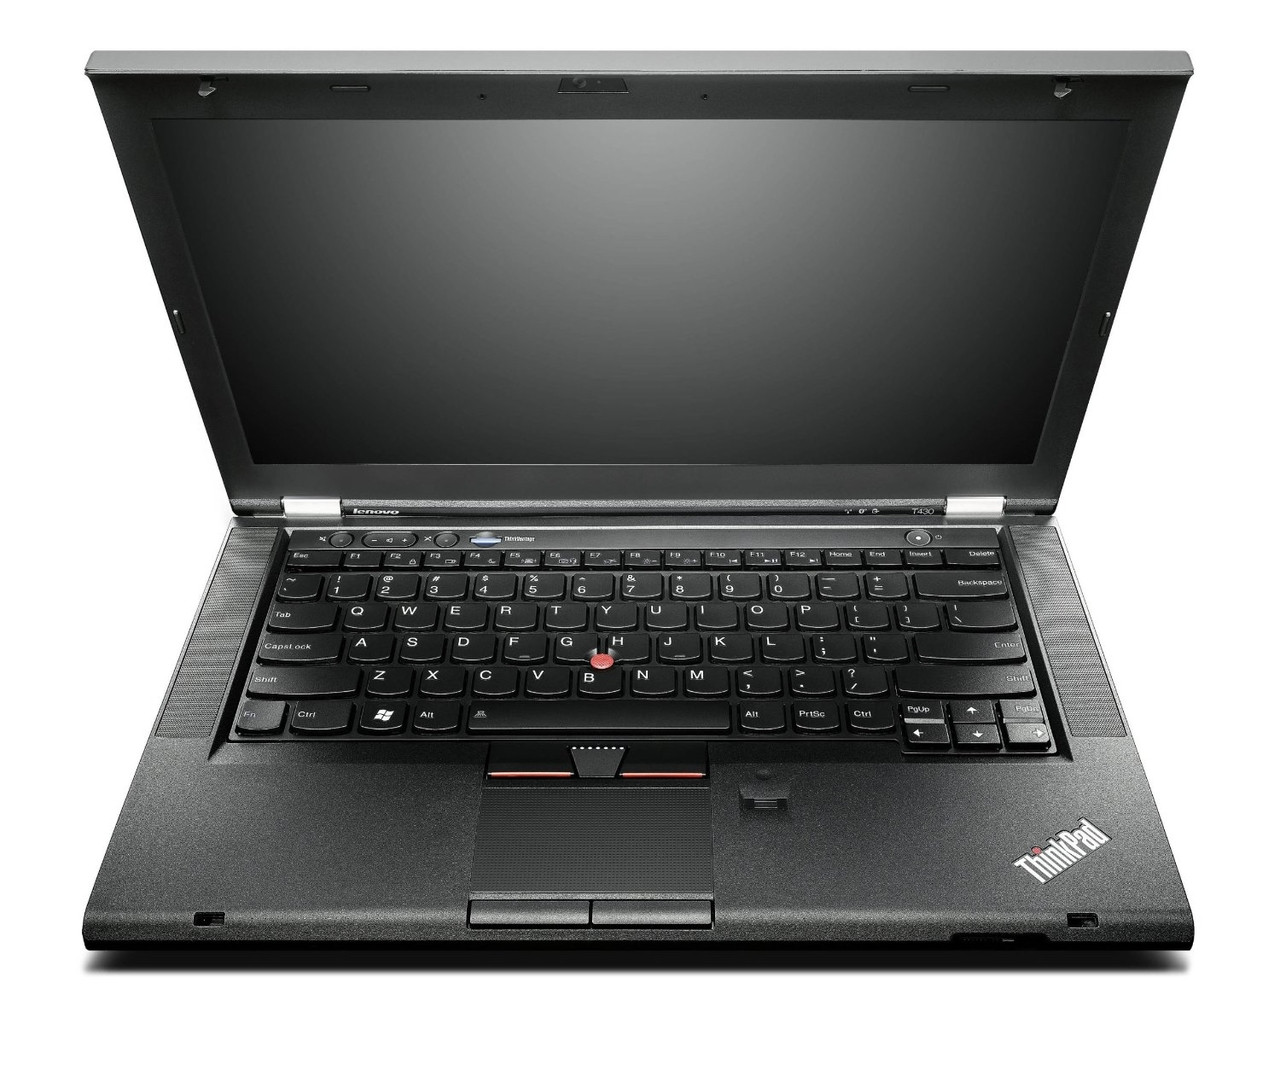 IBM Lenovo Thinkpad T430 Laptop Core i5 2.90GHz, 4GB Ram, 320GB HDD, DVD-RW, Windows 10 Pro 64 Notebook